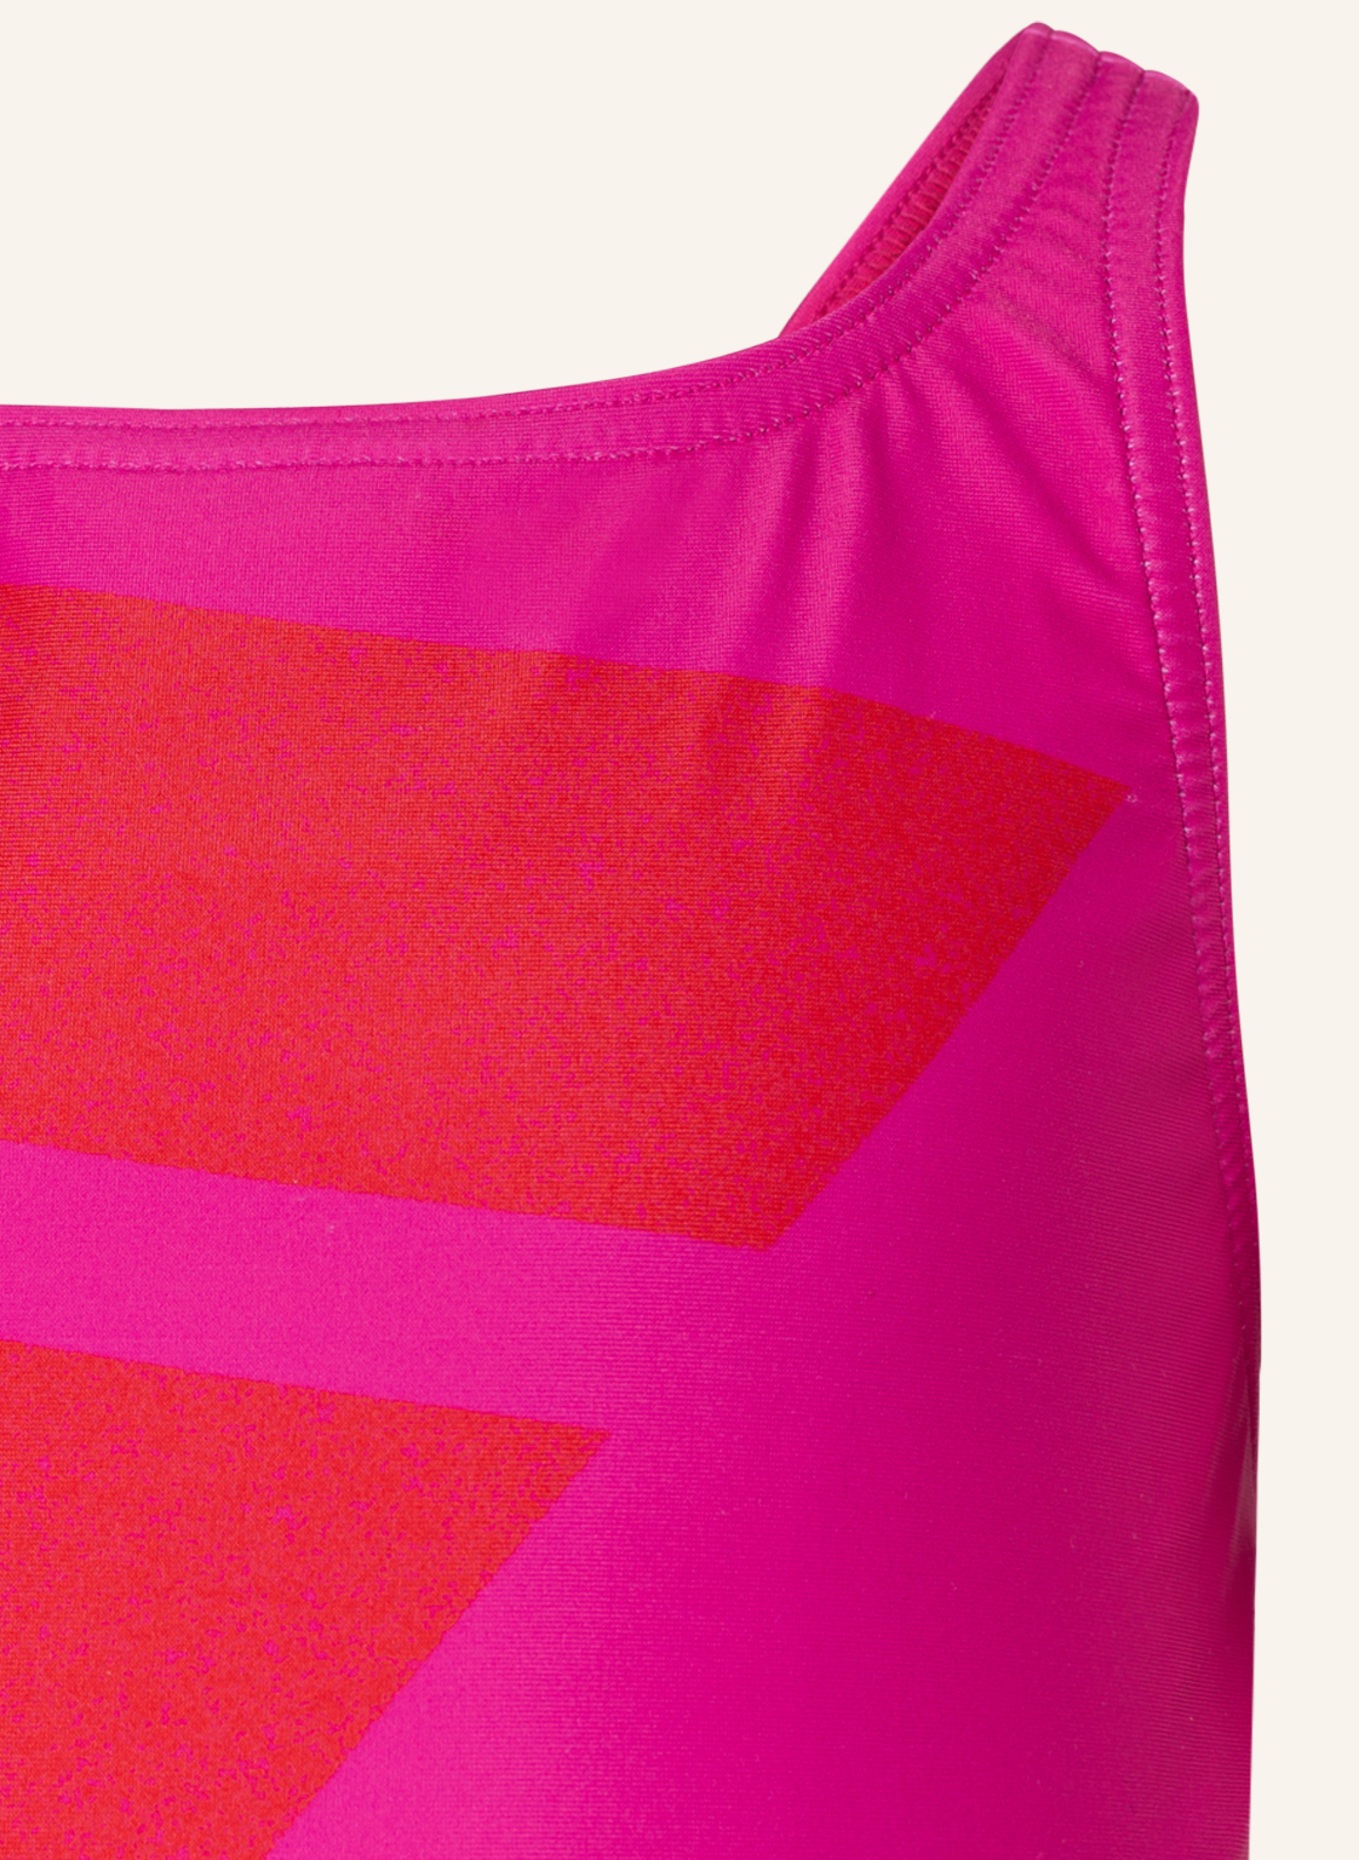 Badeanzug BARS rot in BIG adidas pink/ SUIT